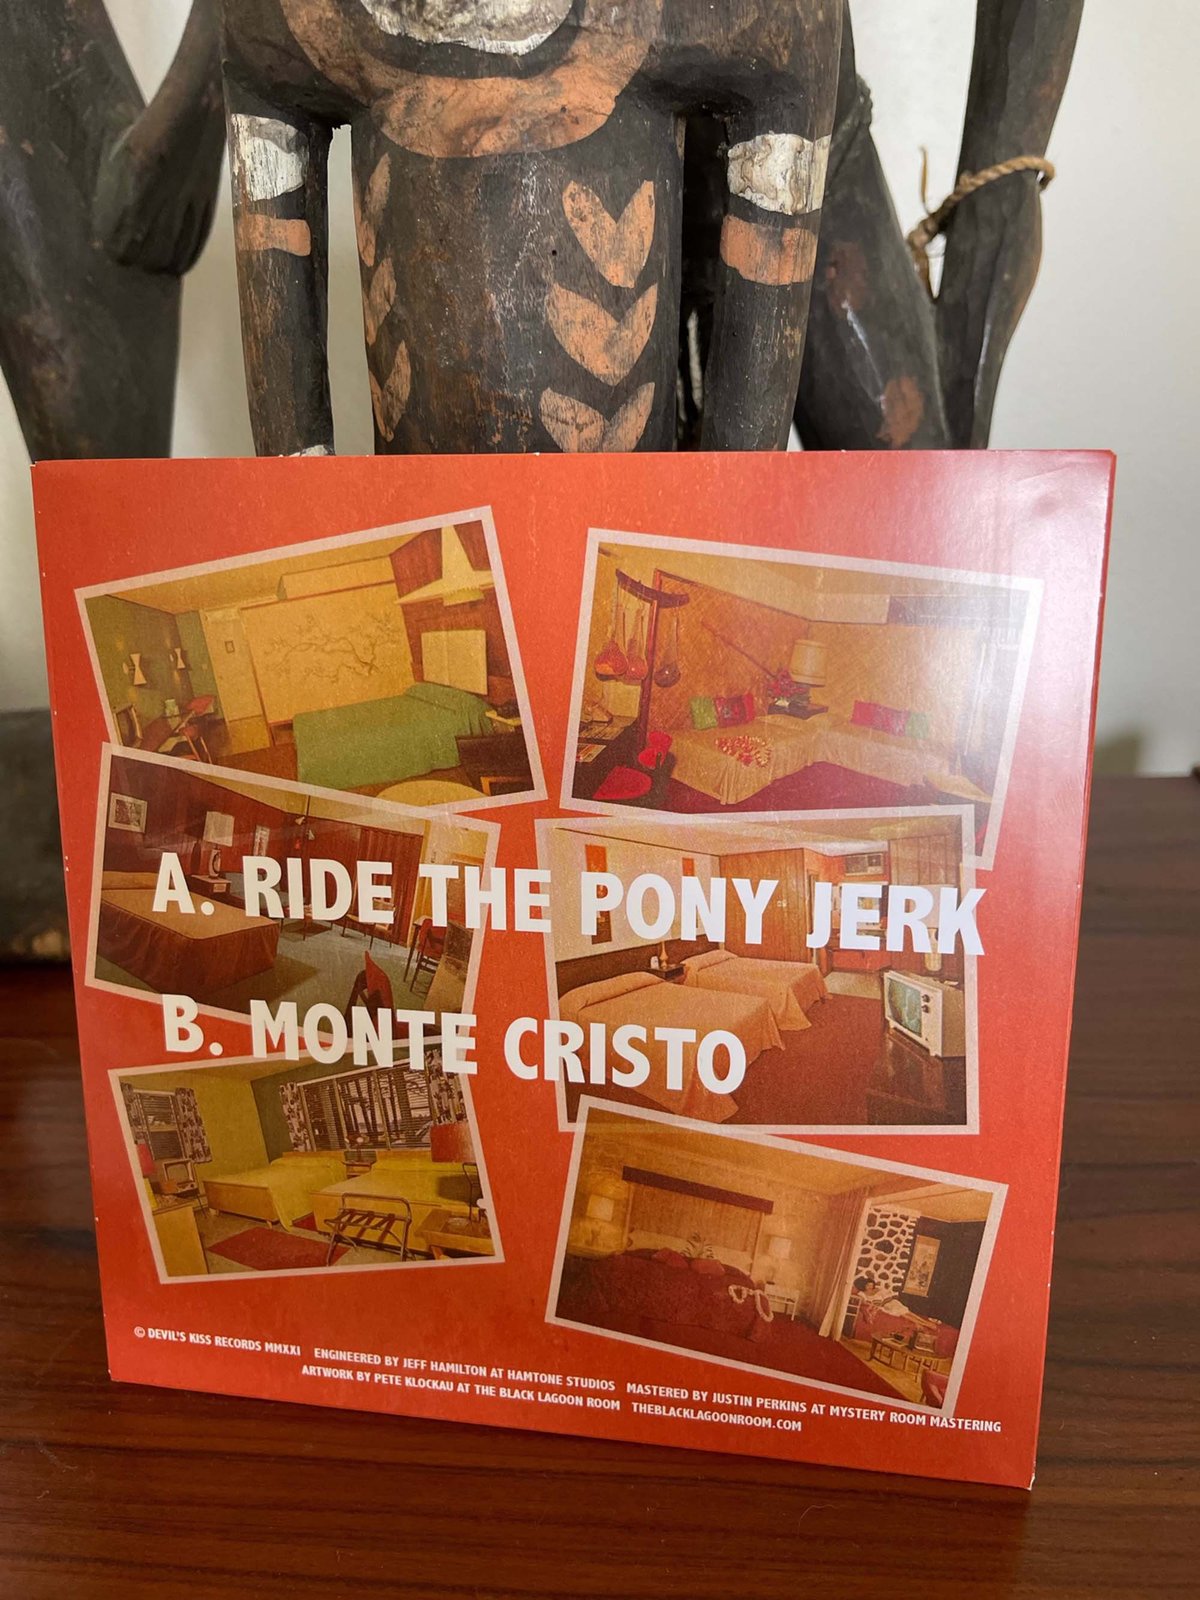 DICK SATAN TRIO "Ride the Pony Jerk b/w Monte Cristo" 45rpm 7" Single Vinyl Record